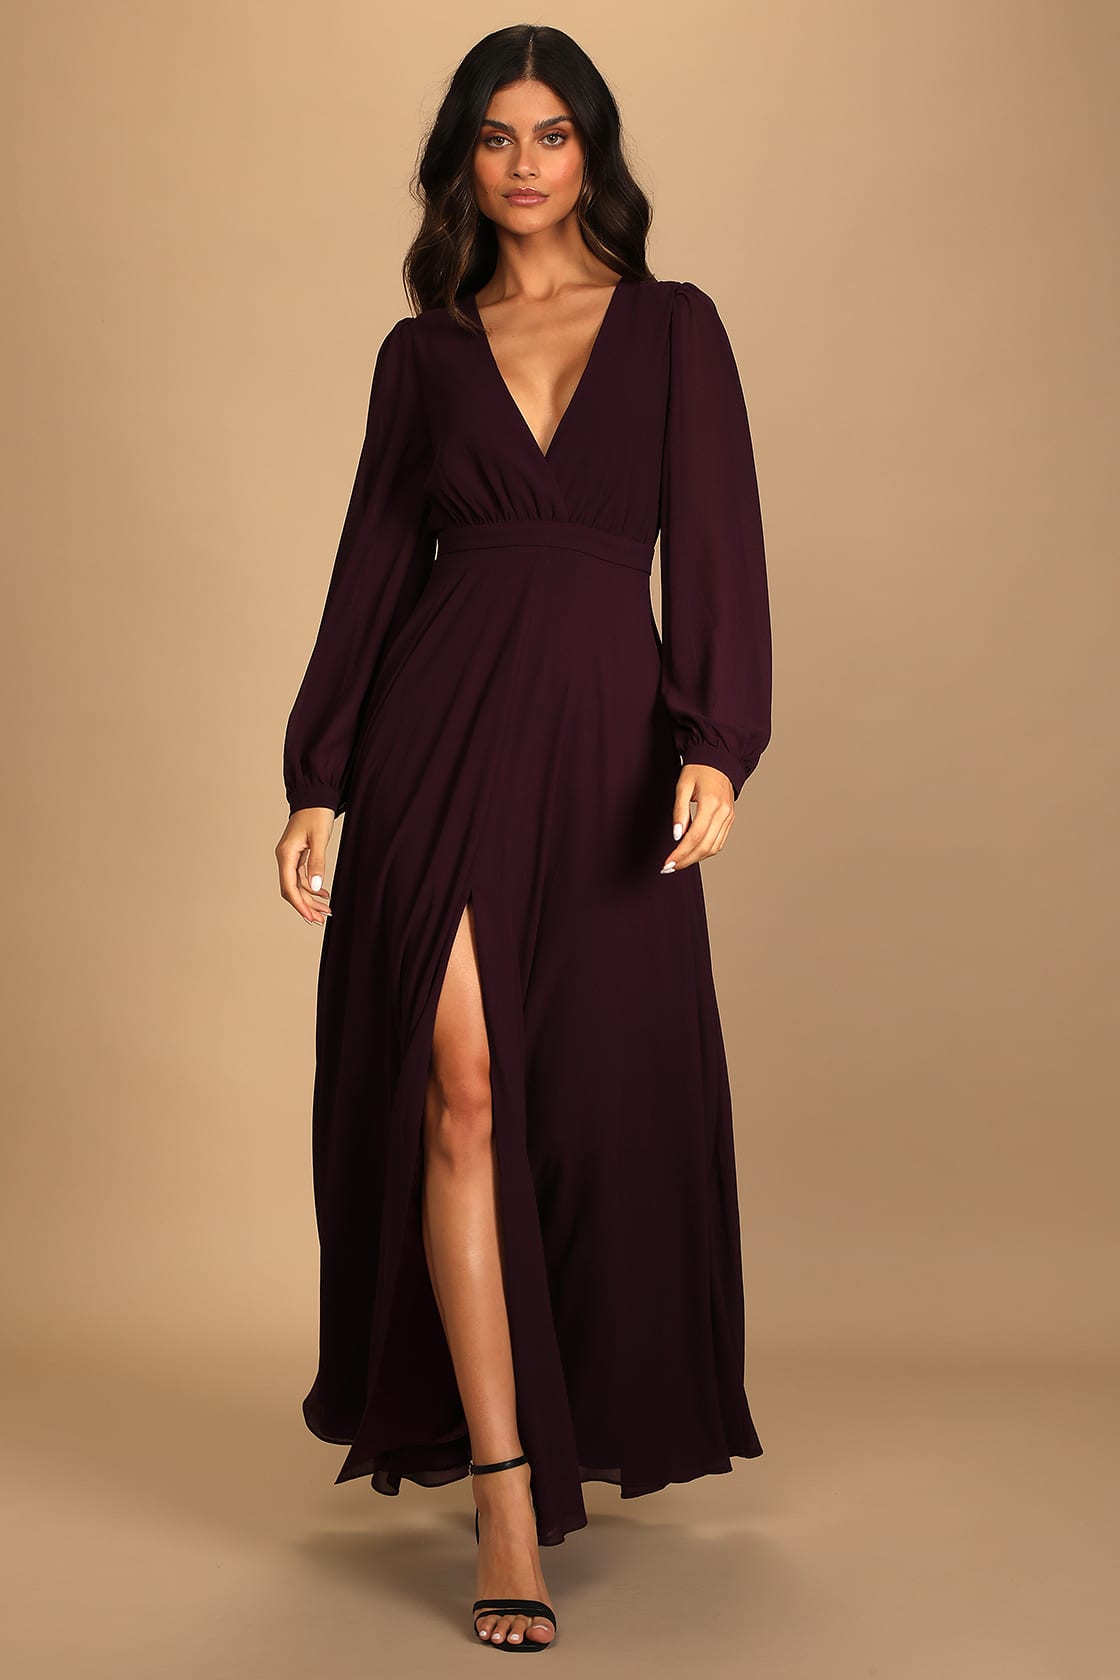 Adoring You Dark Purple Long Sleeve Maxi Dress